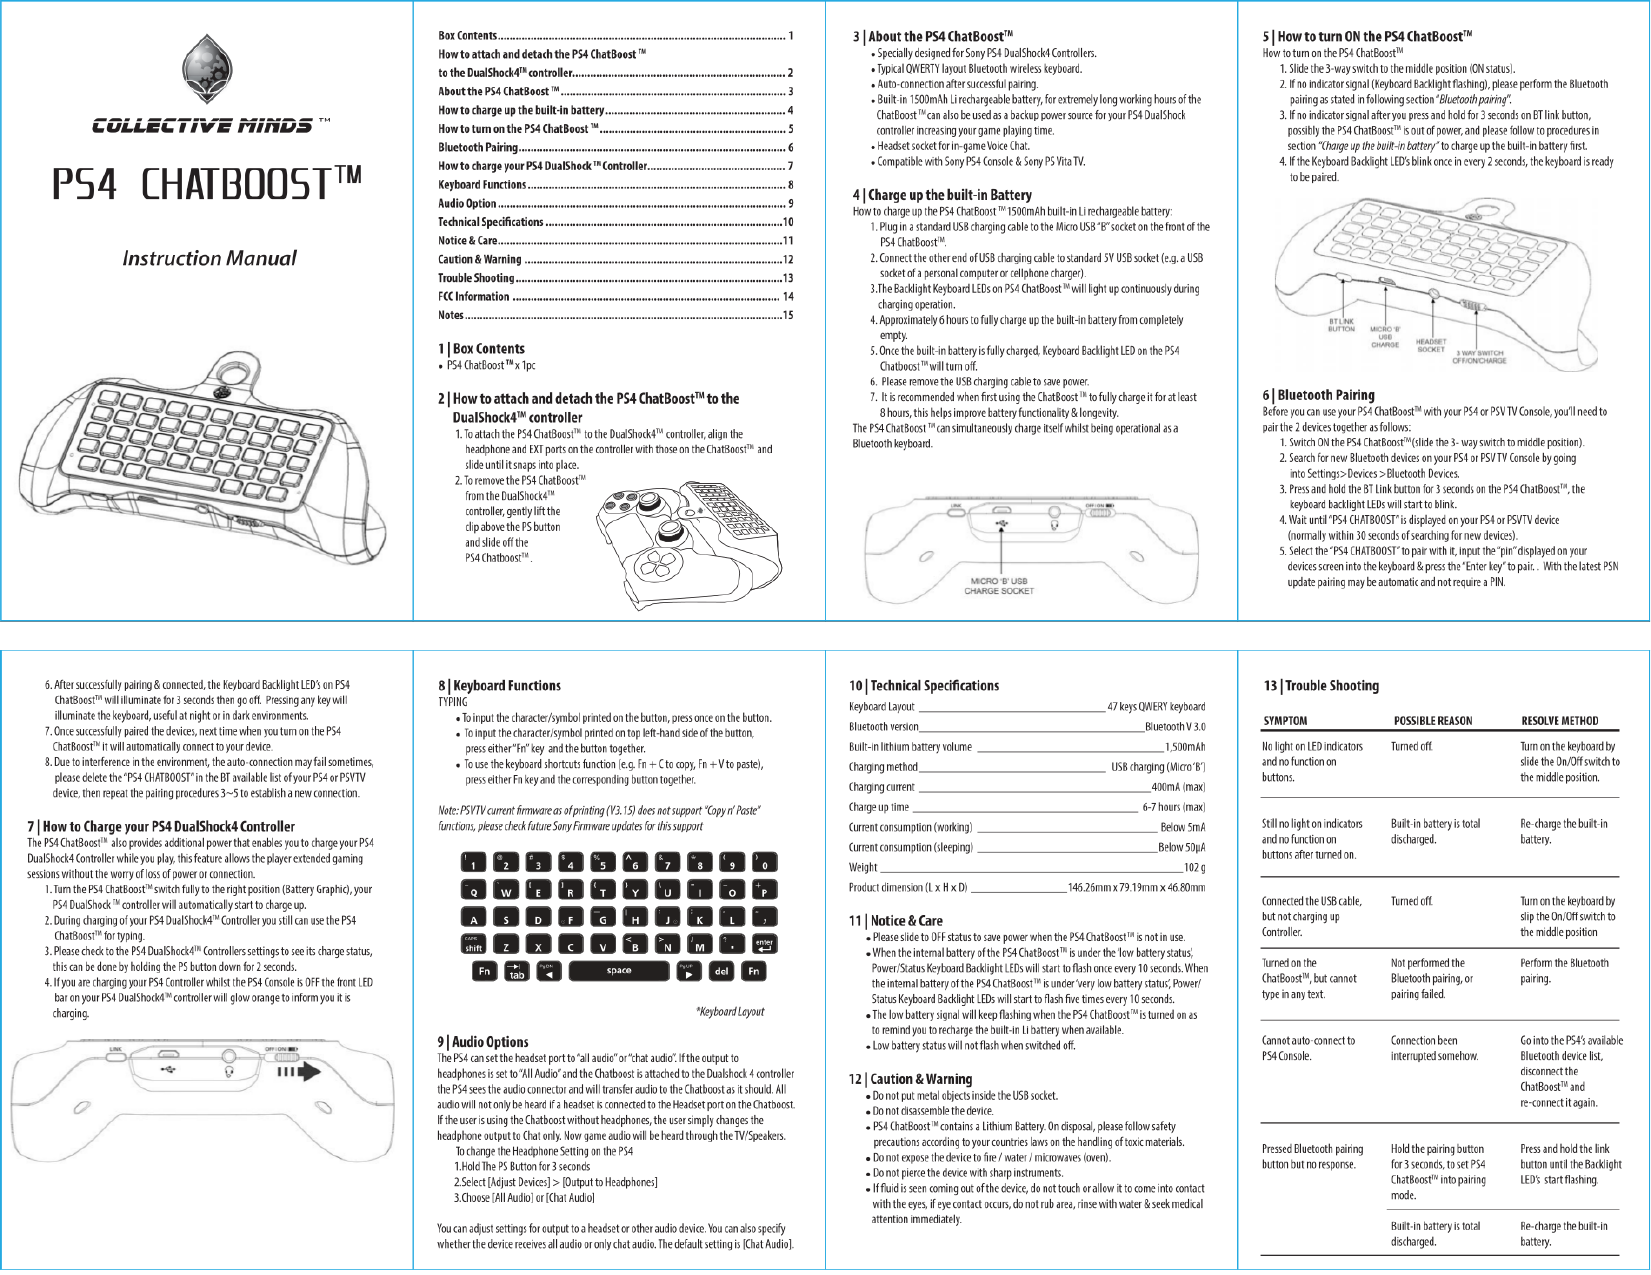 ps4 instruction manual pdf